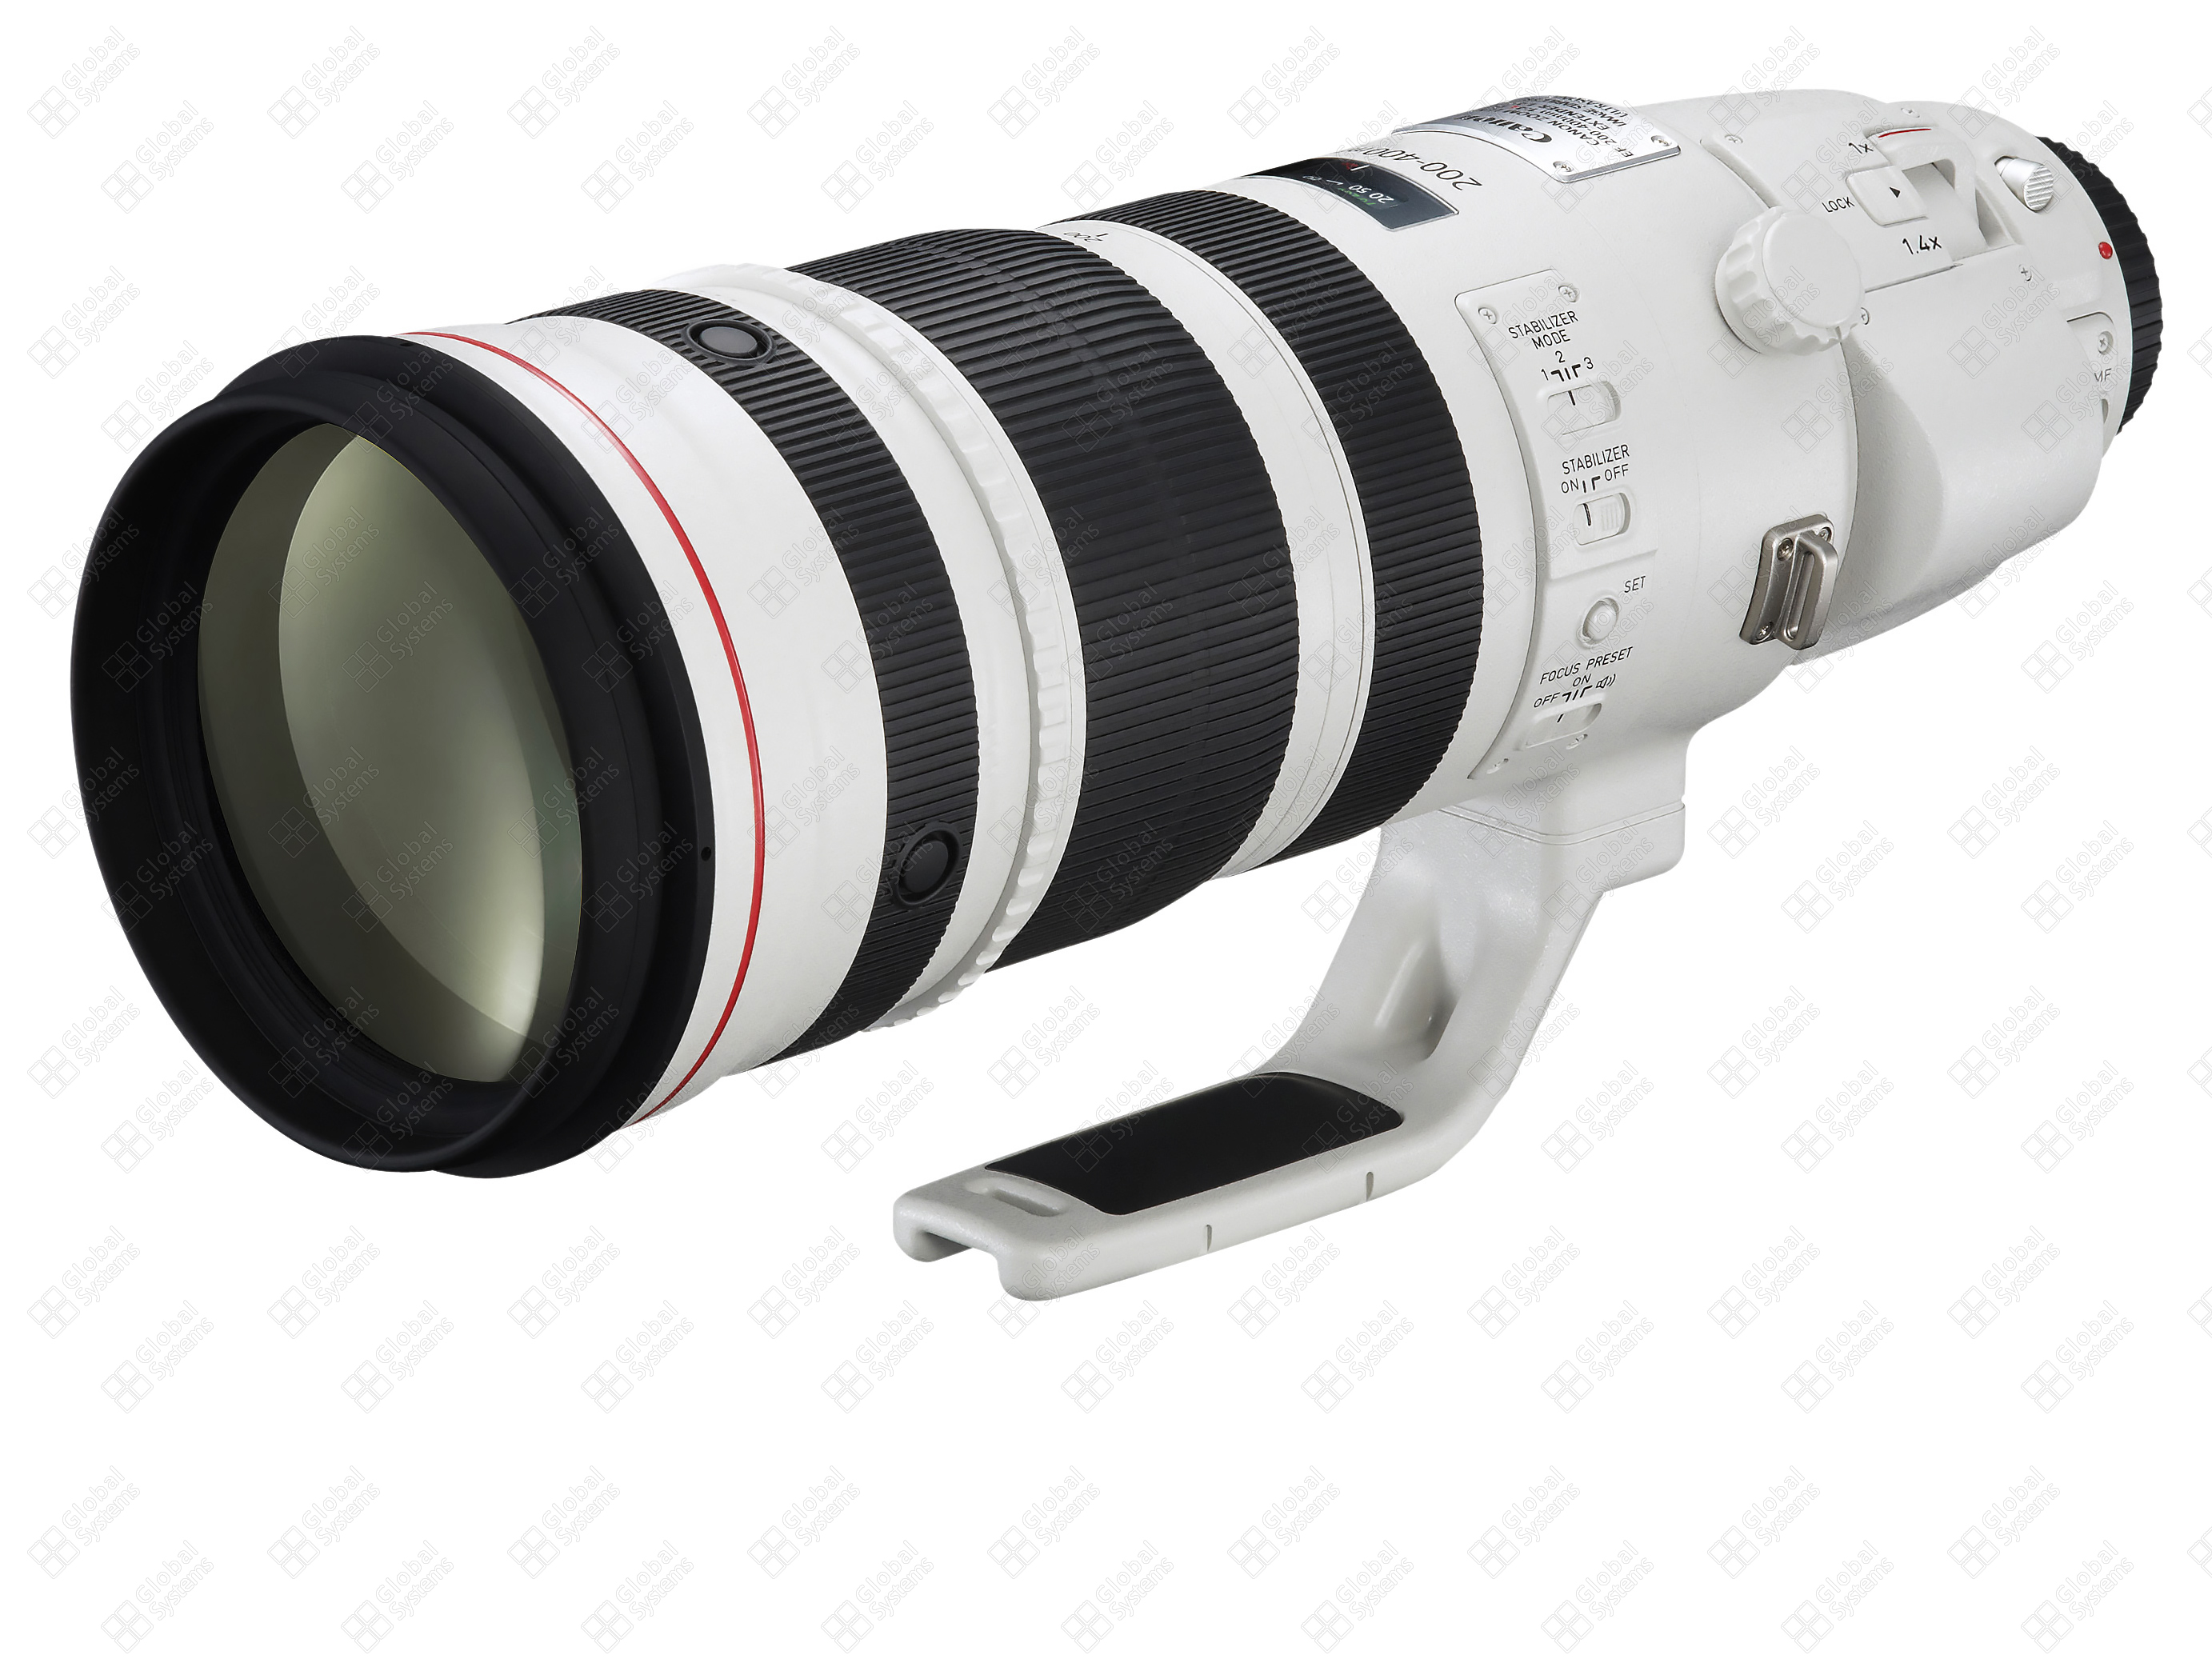 EF 200-400mm f/4L IS USM Extender 1.4x телеобъектив Canon